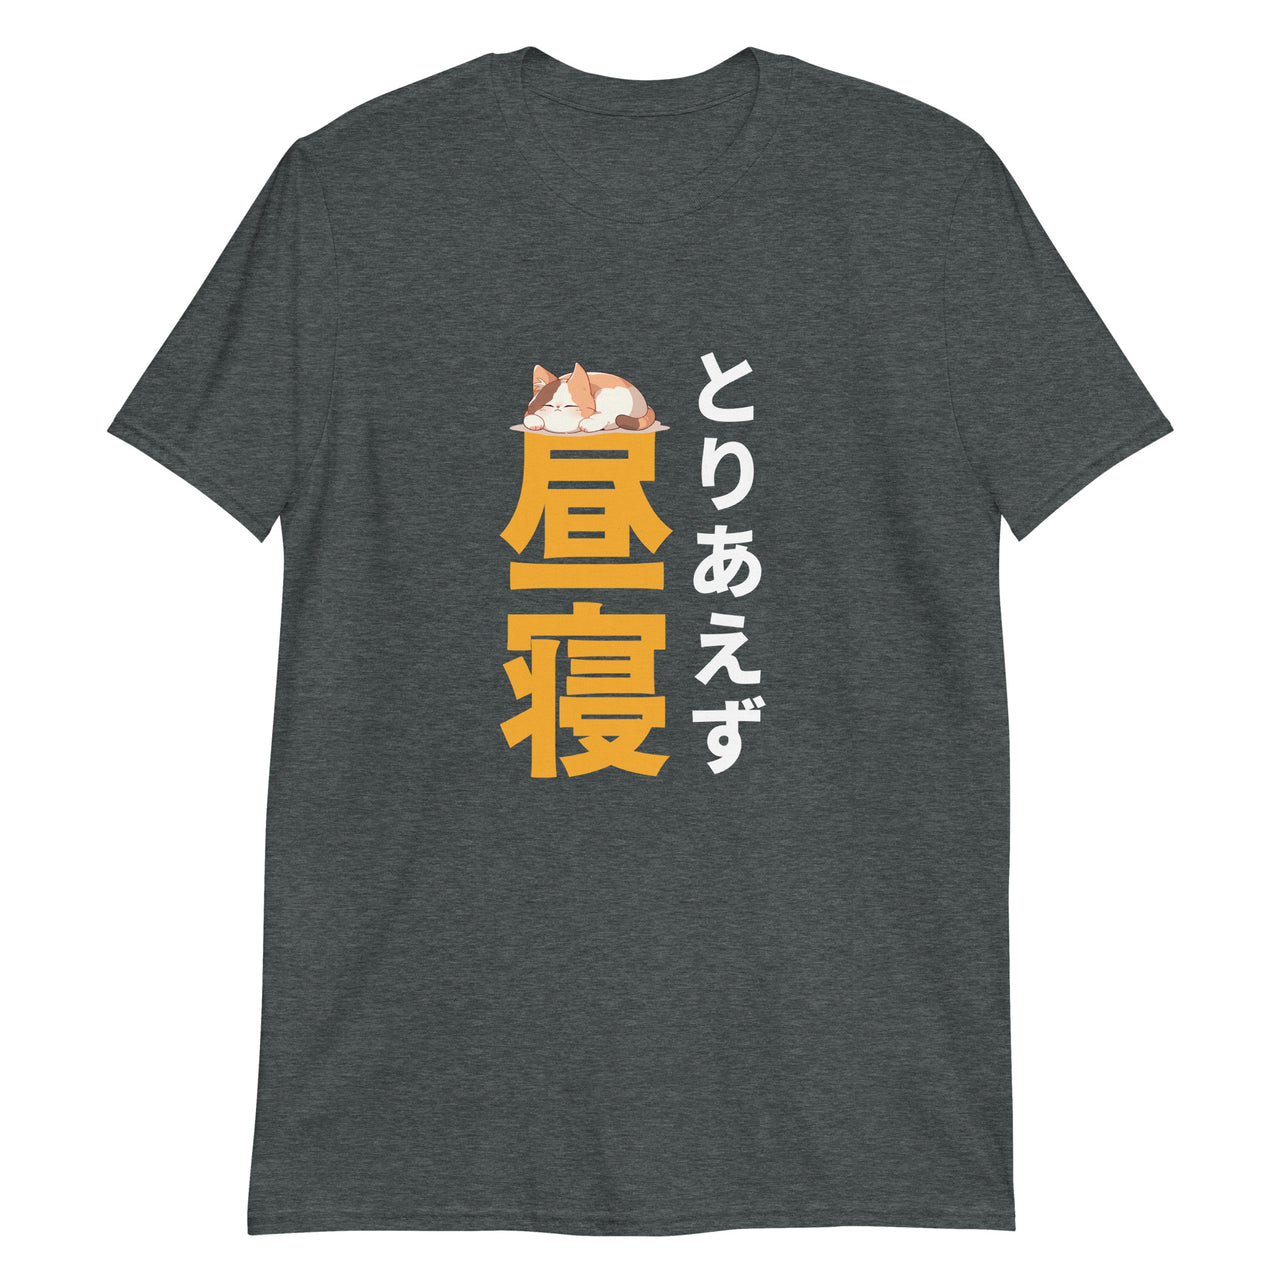 A little Cat Nap in Japanese T-Shirt